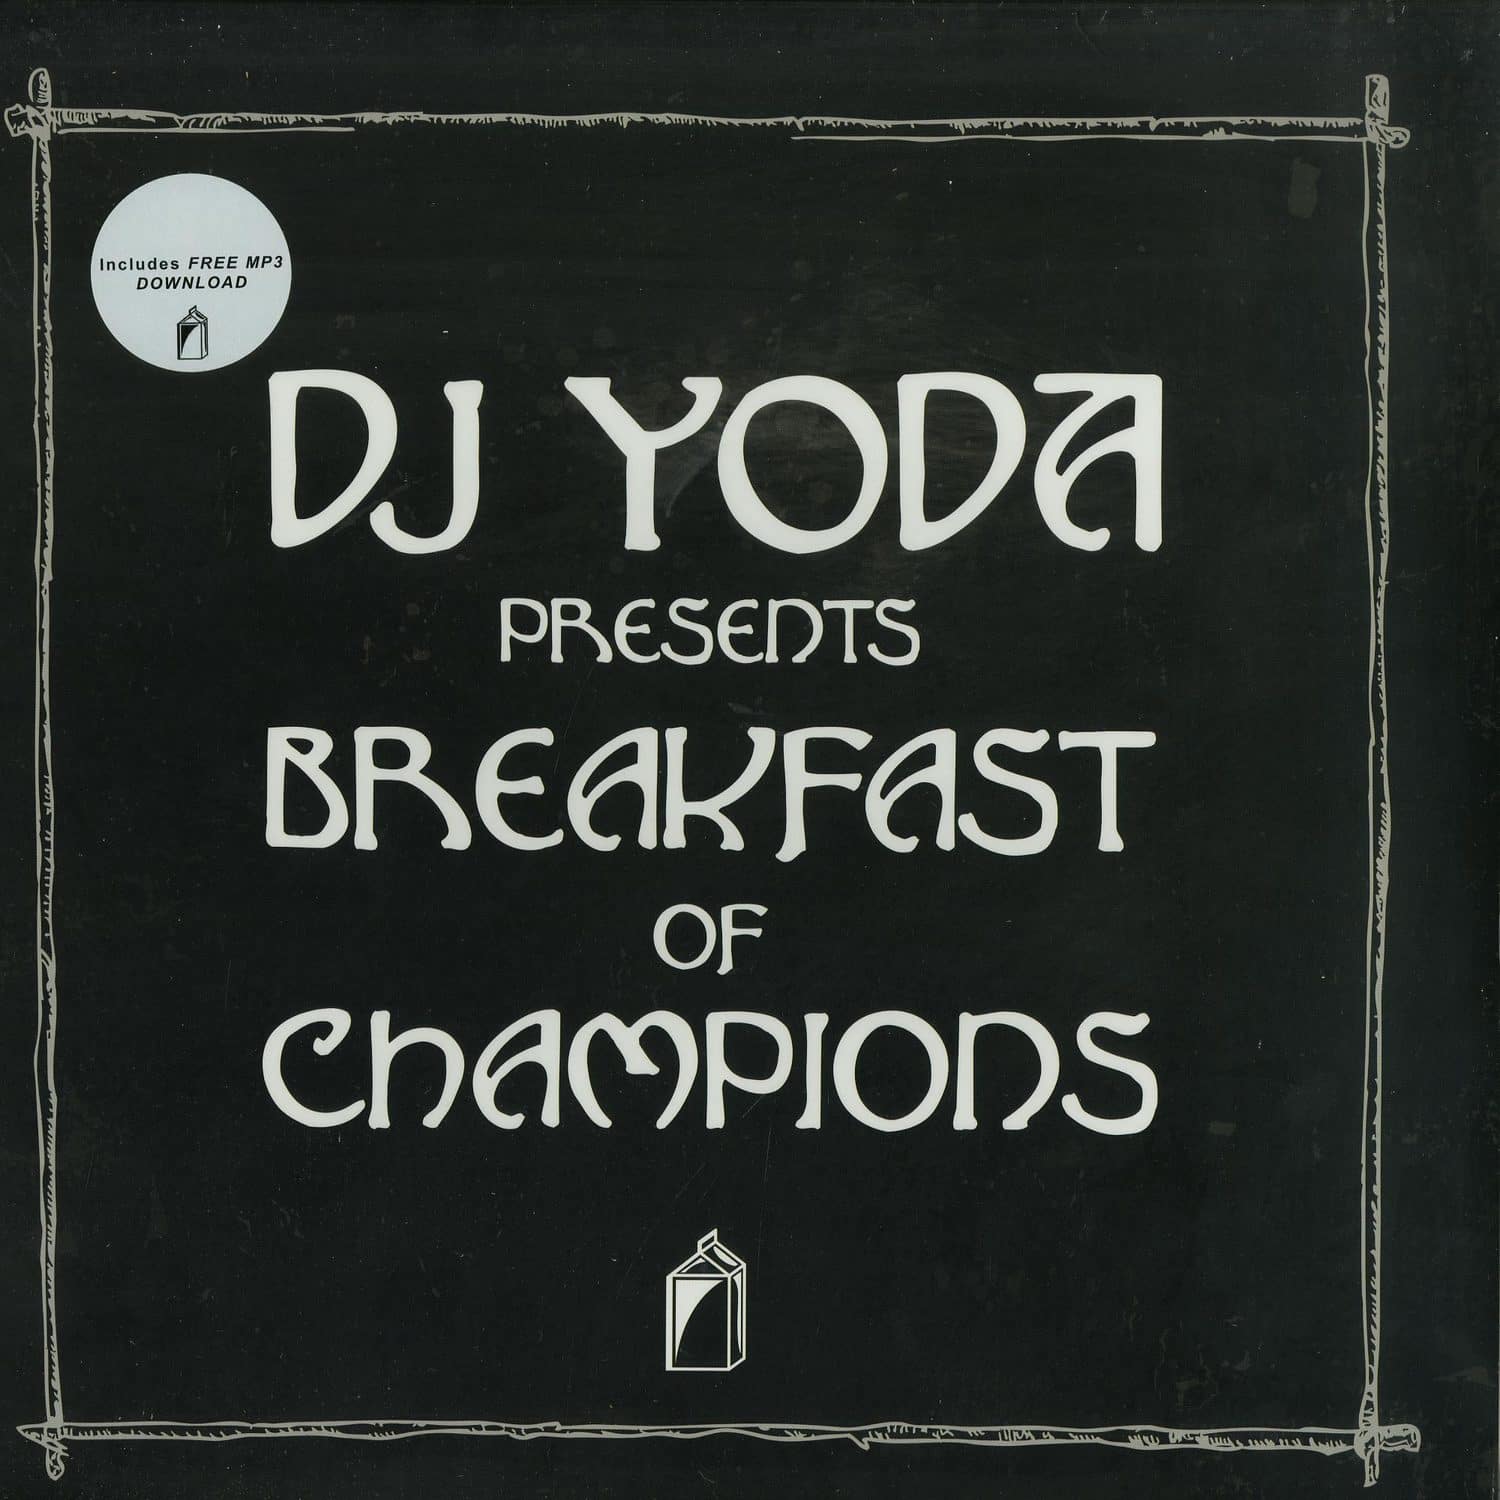 DJ Yoda - BREAKFAST OF CHAMPIONS 